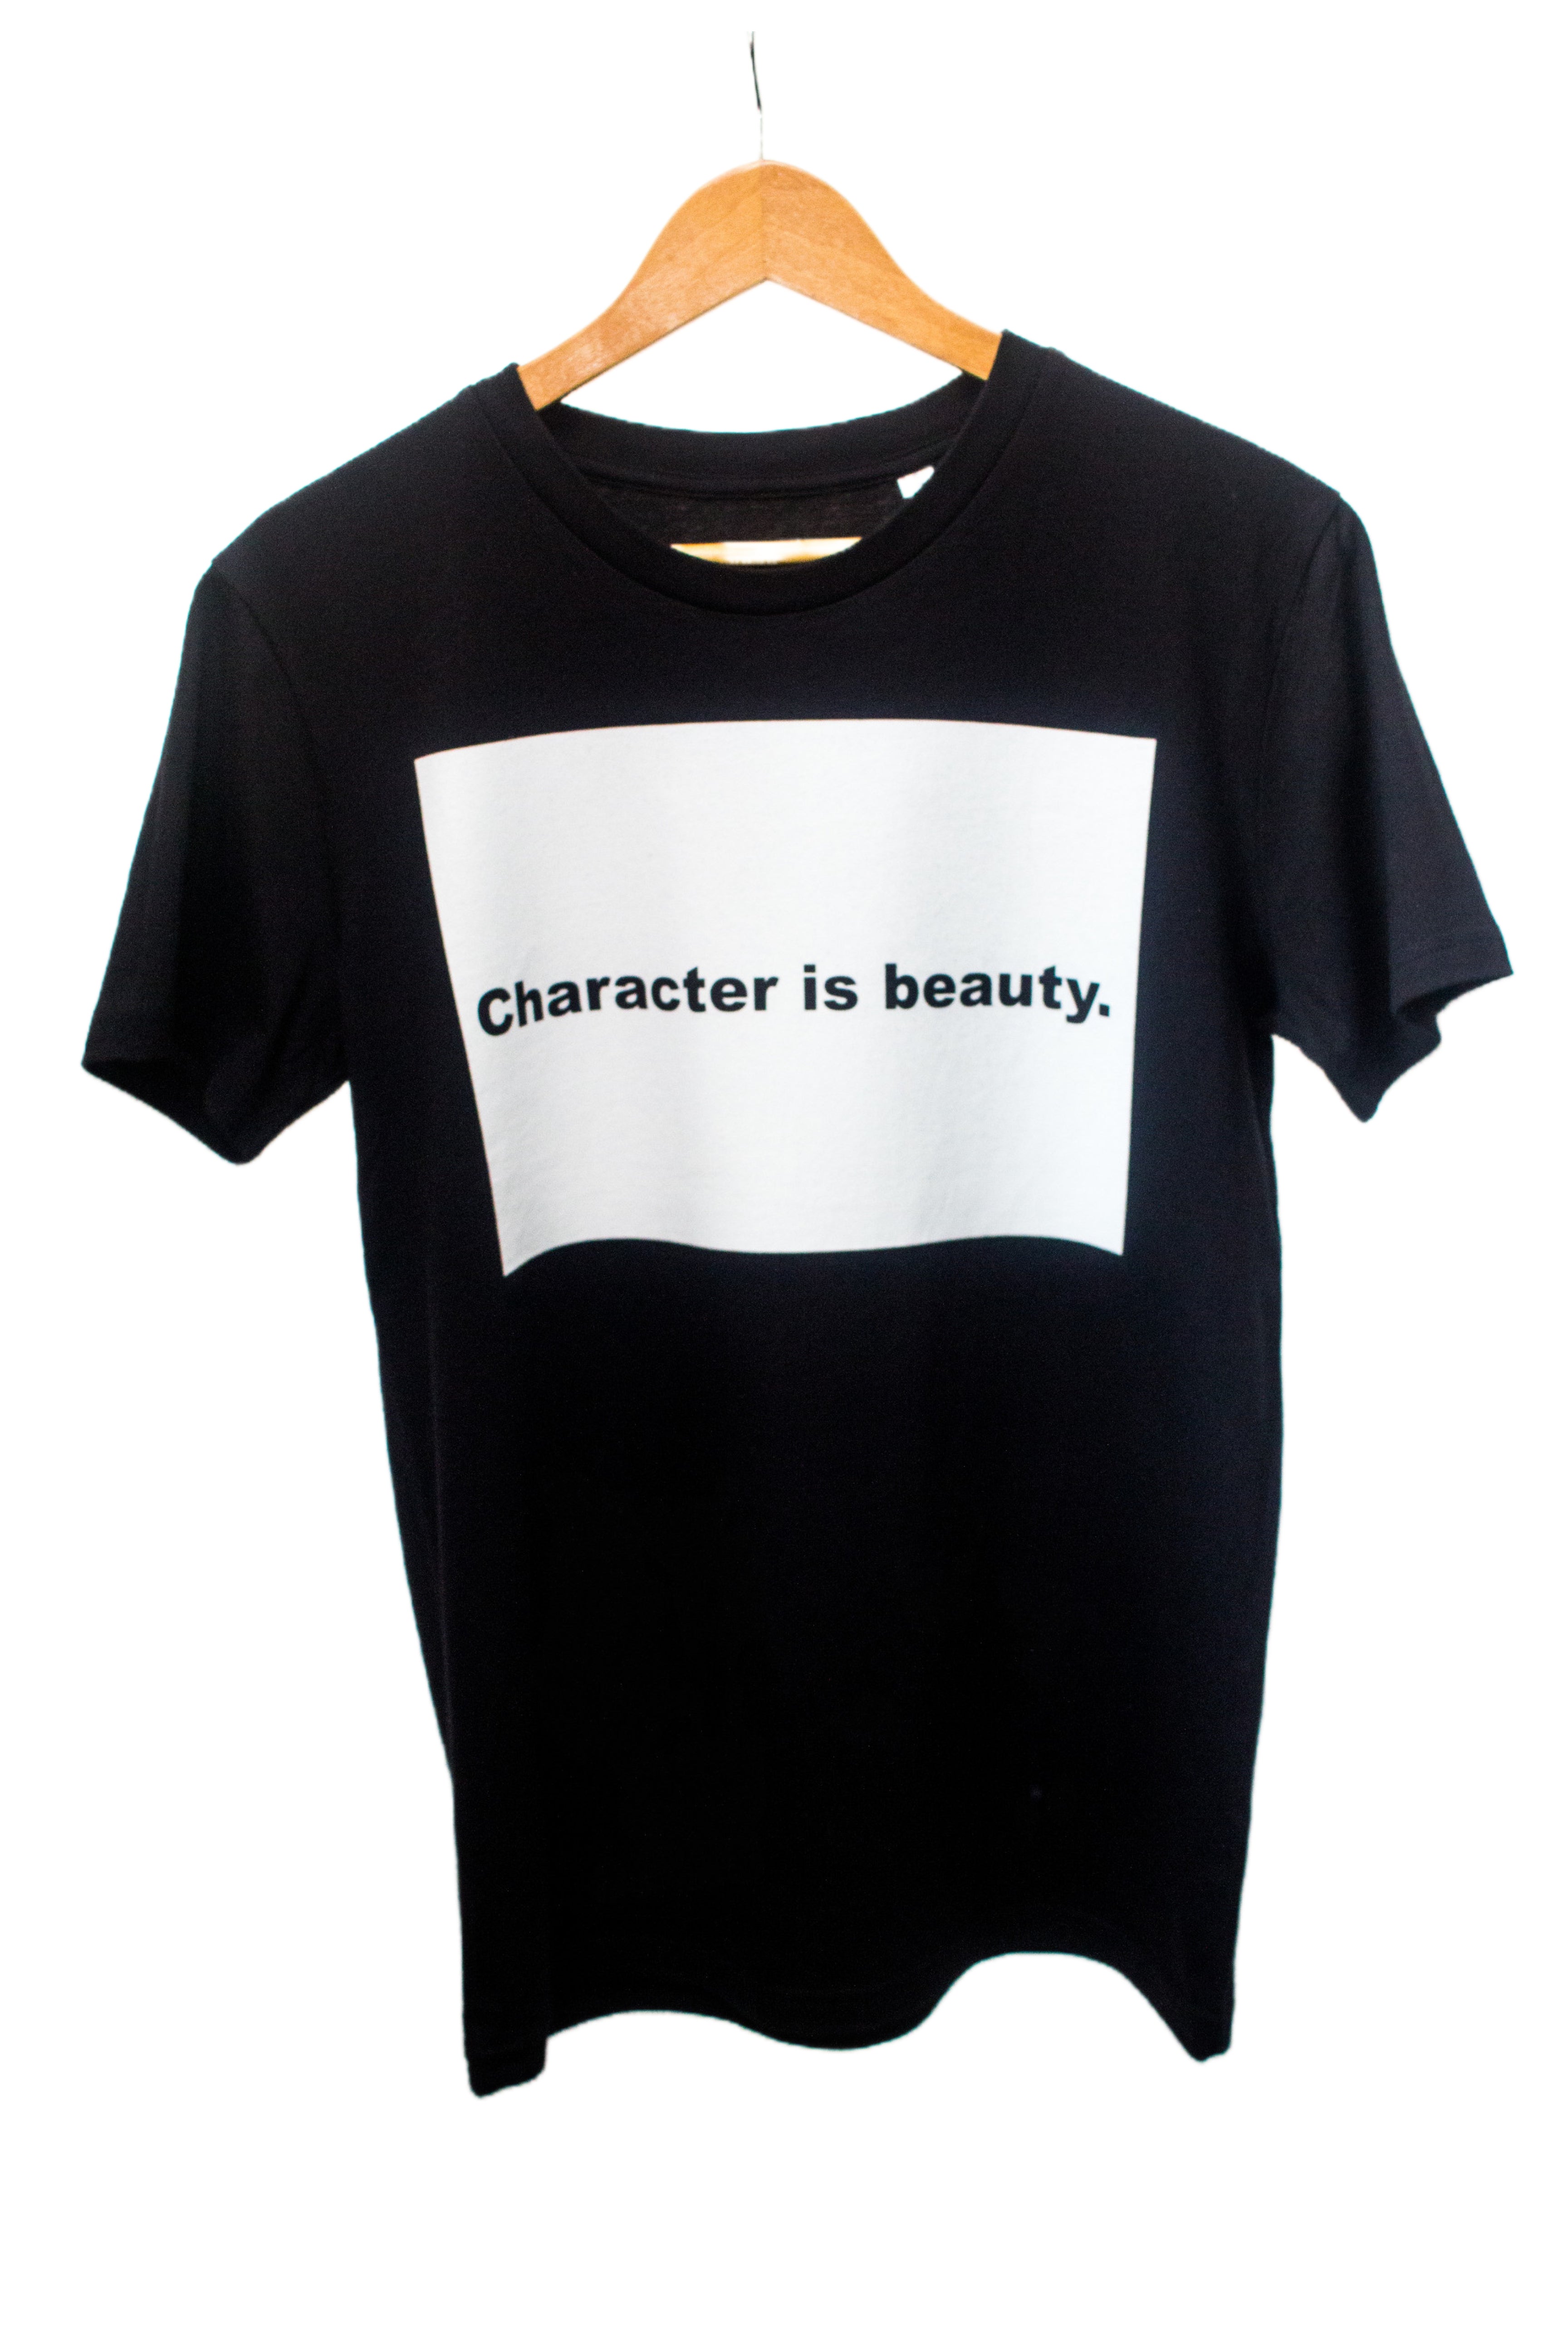 "Character Is Beauty" - T-Shirt (Black)